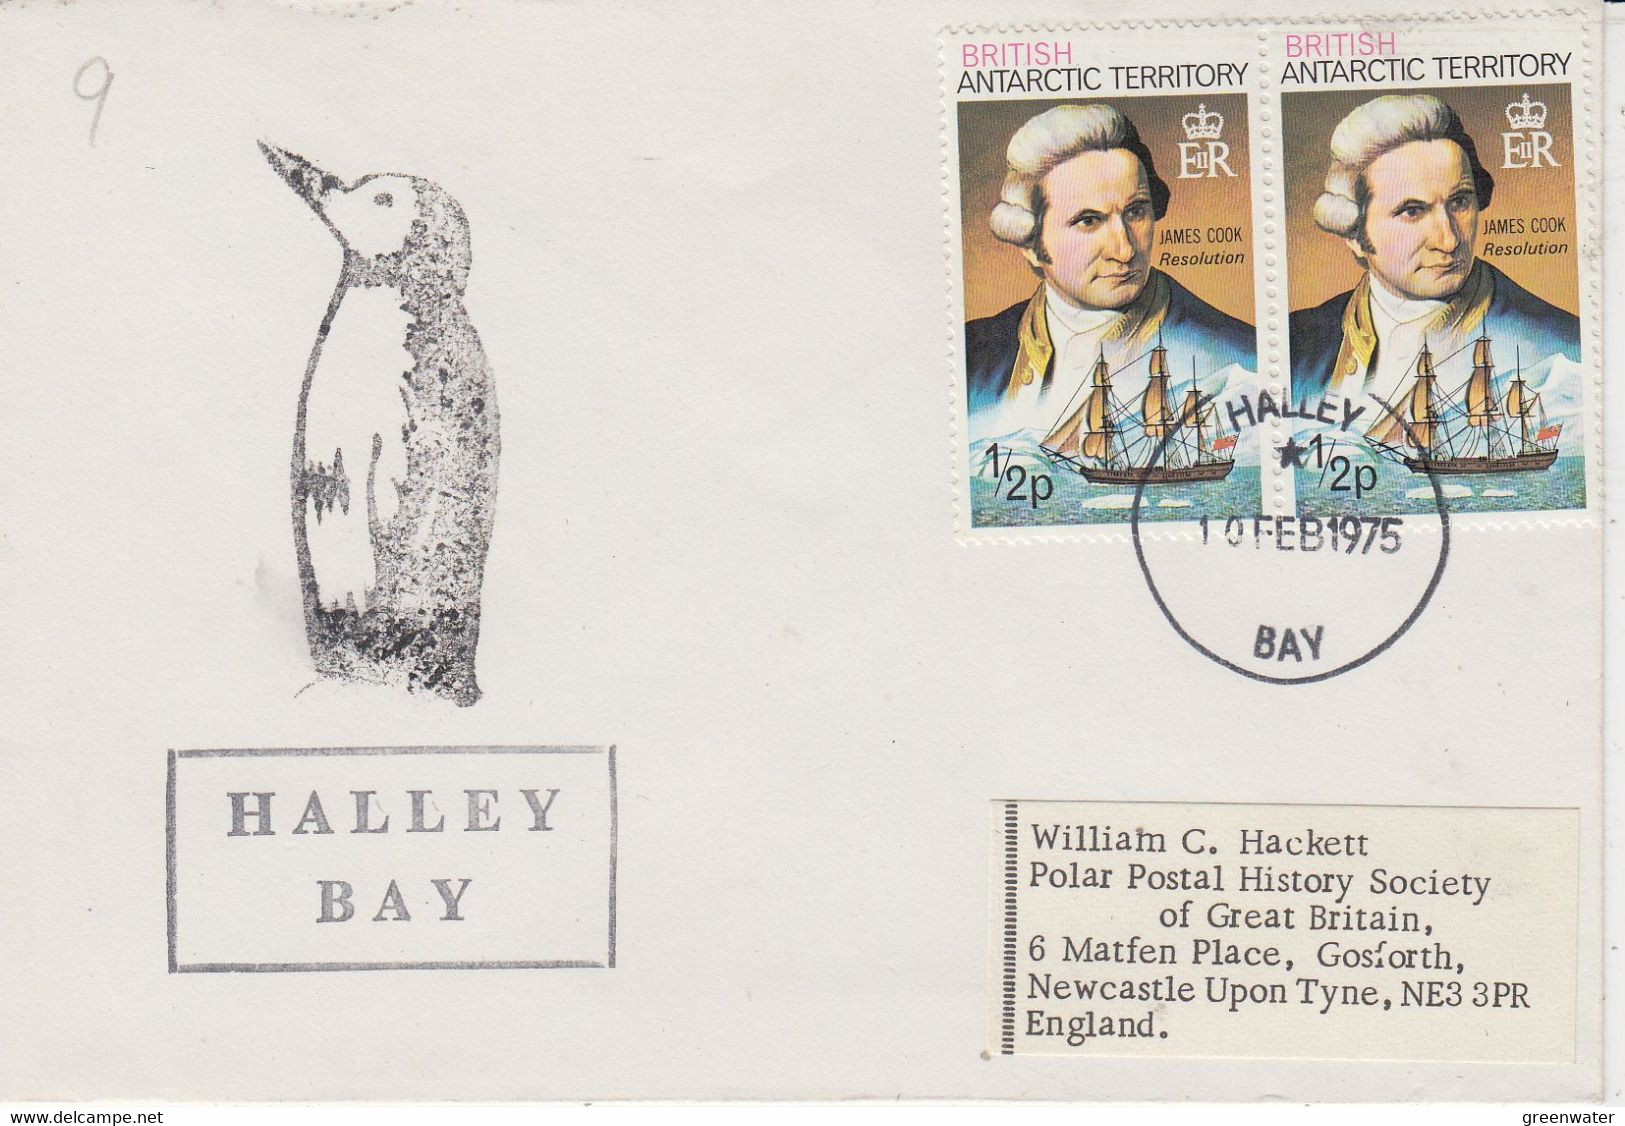 British Antarctic Territory (BAT) Halley Bay Ca Halley  Bay 10 FEB 1975 (TA180) - Lettres & Documents